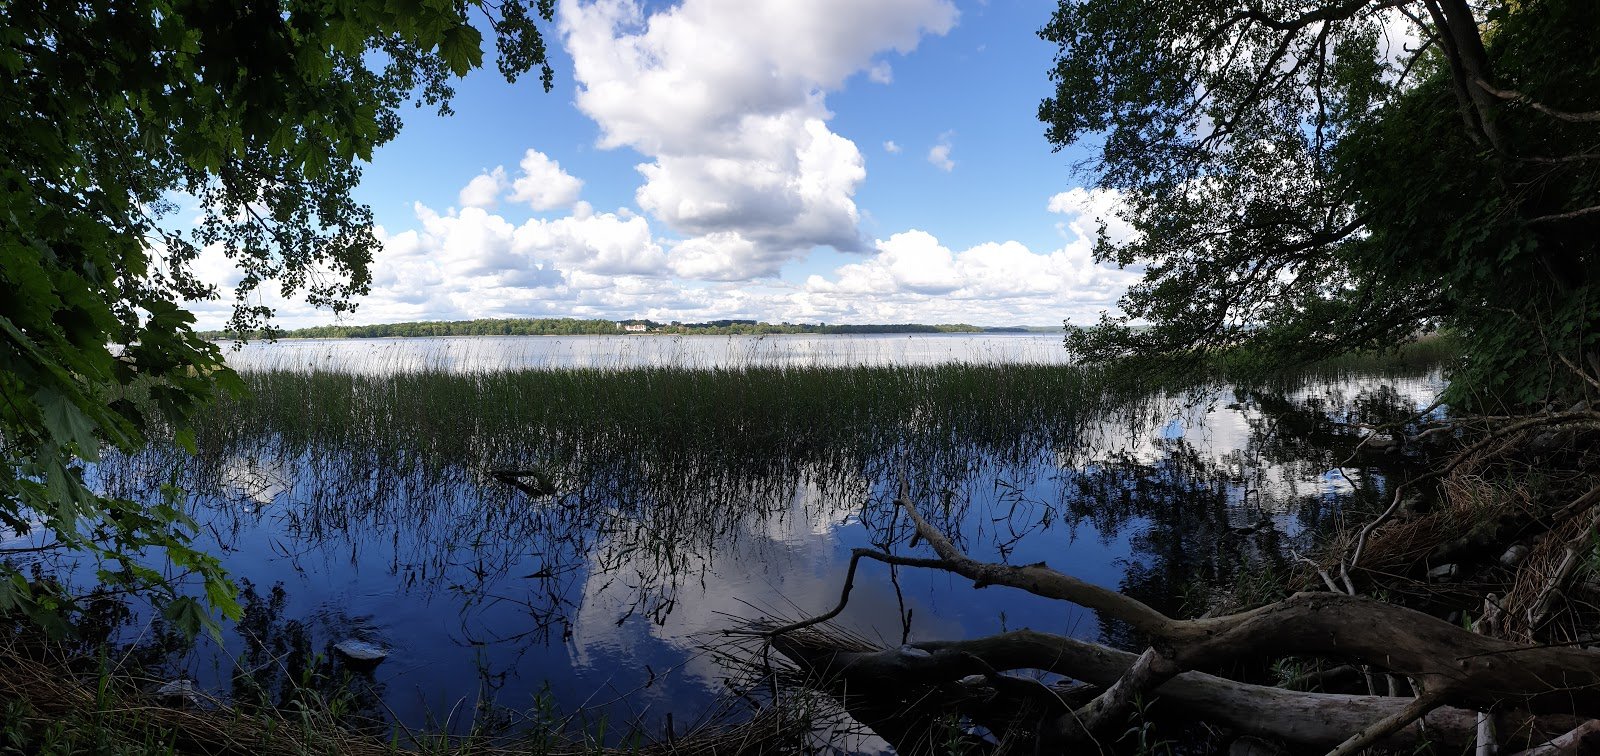 Stig Klintaskogen naturreservat, Höör